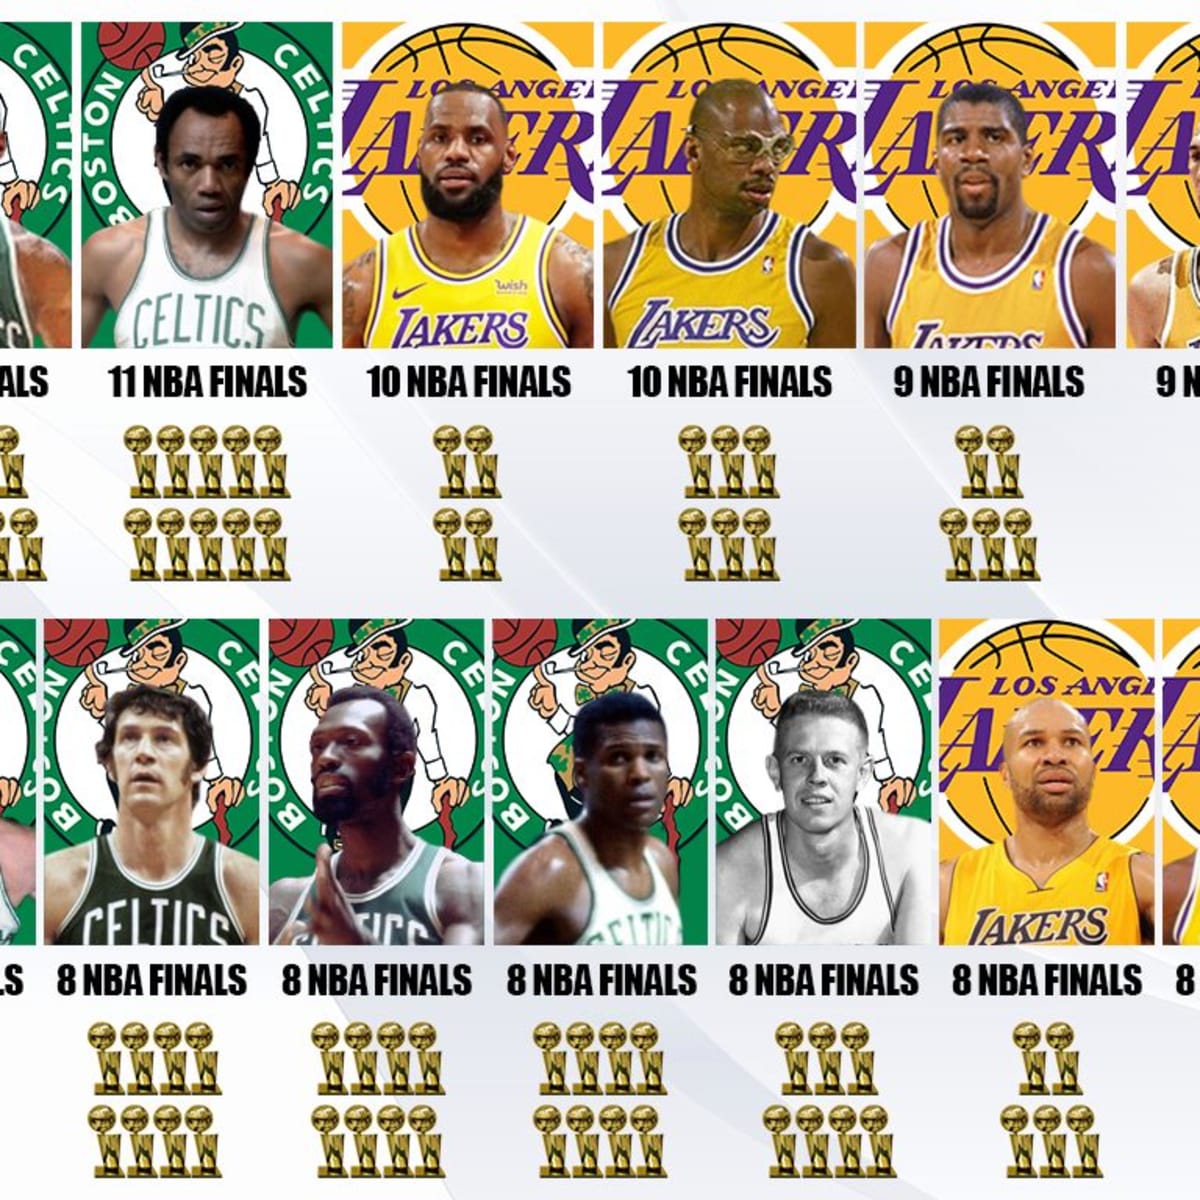 Basketball - NBA, Champions, History